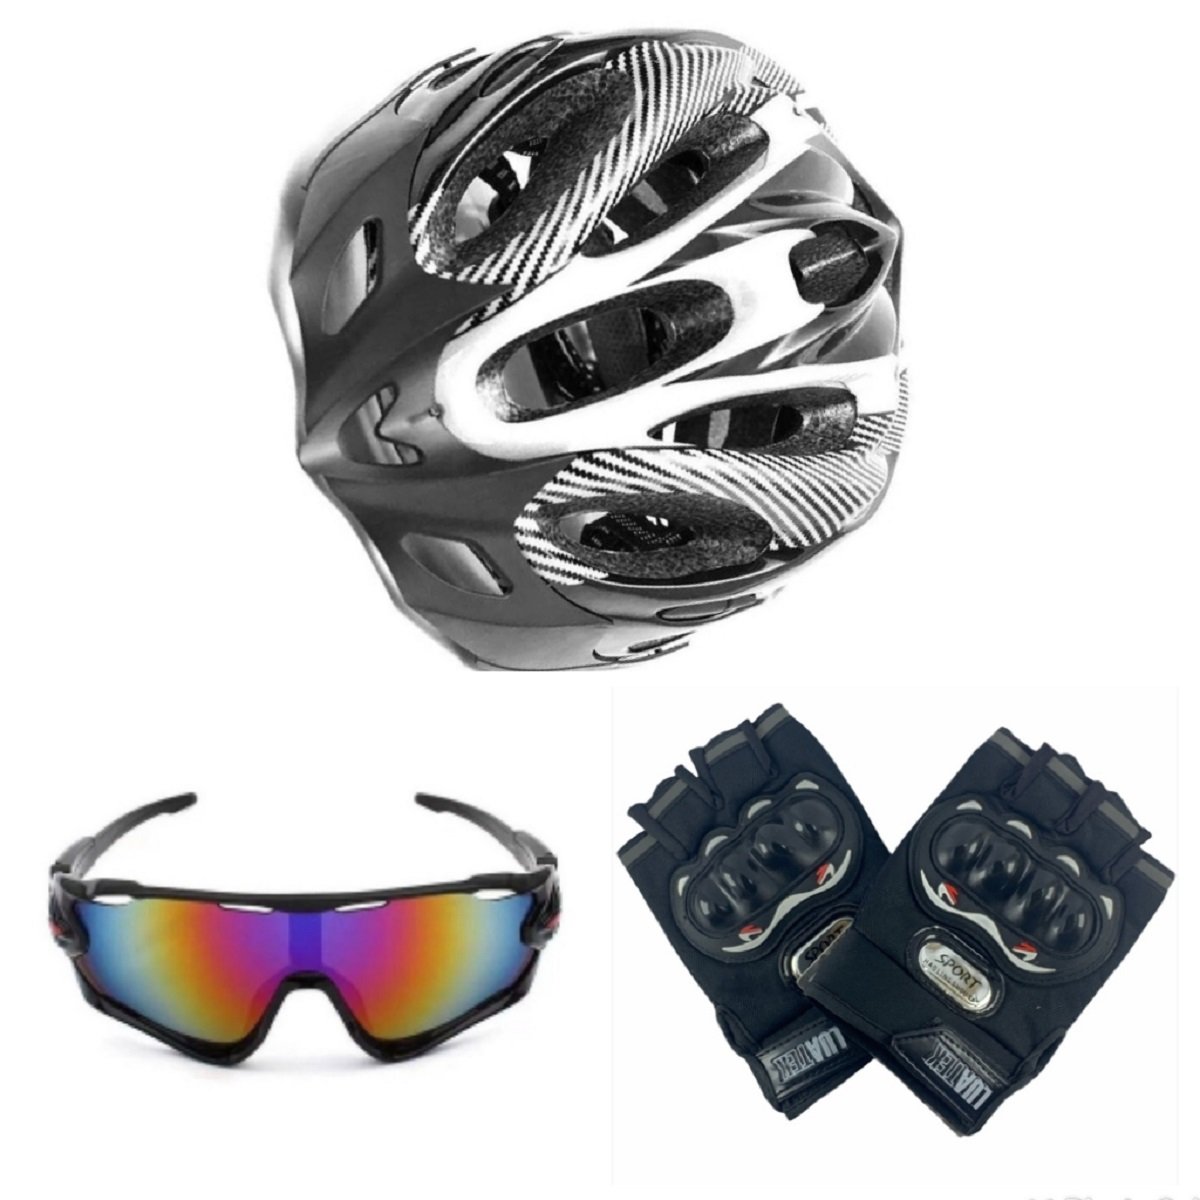 Capacete Segurança Bicicleta Óculos Protetor E Luva Protetora - Preto - 1